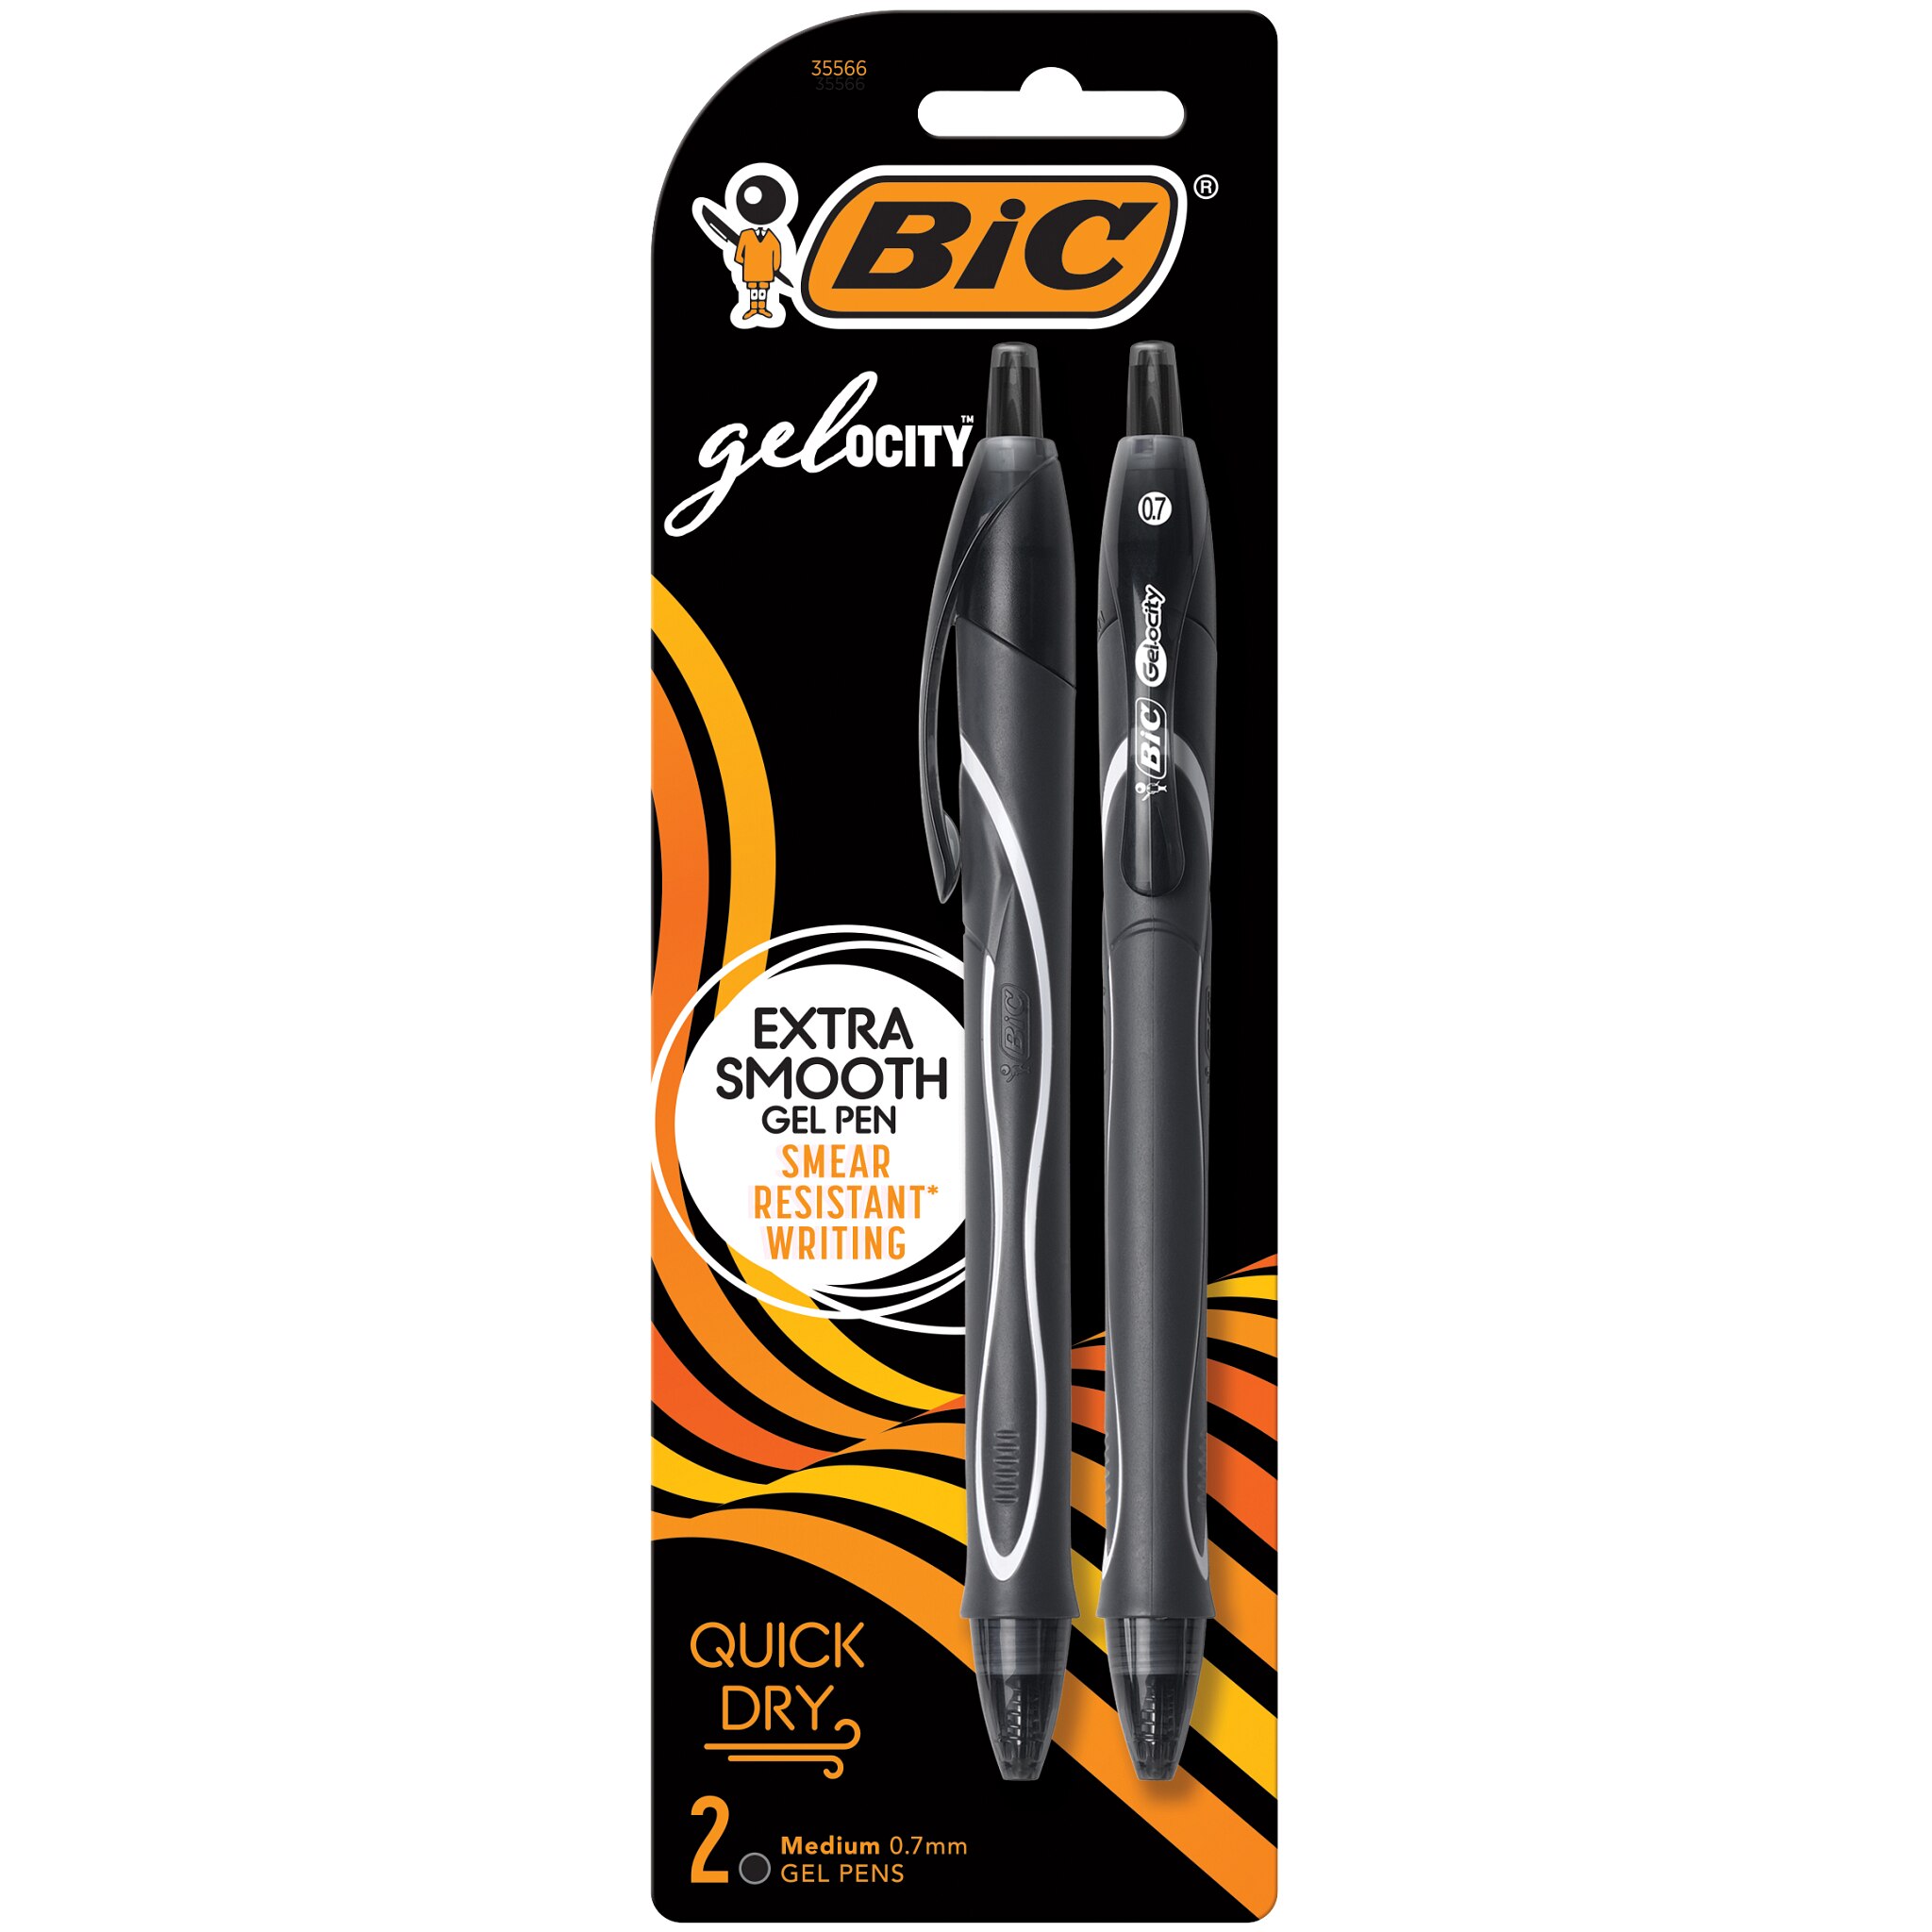 BIC Gel-ocity Quick Dry Gel Pen, Medium Point, Black, 2 Ct , CVS